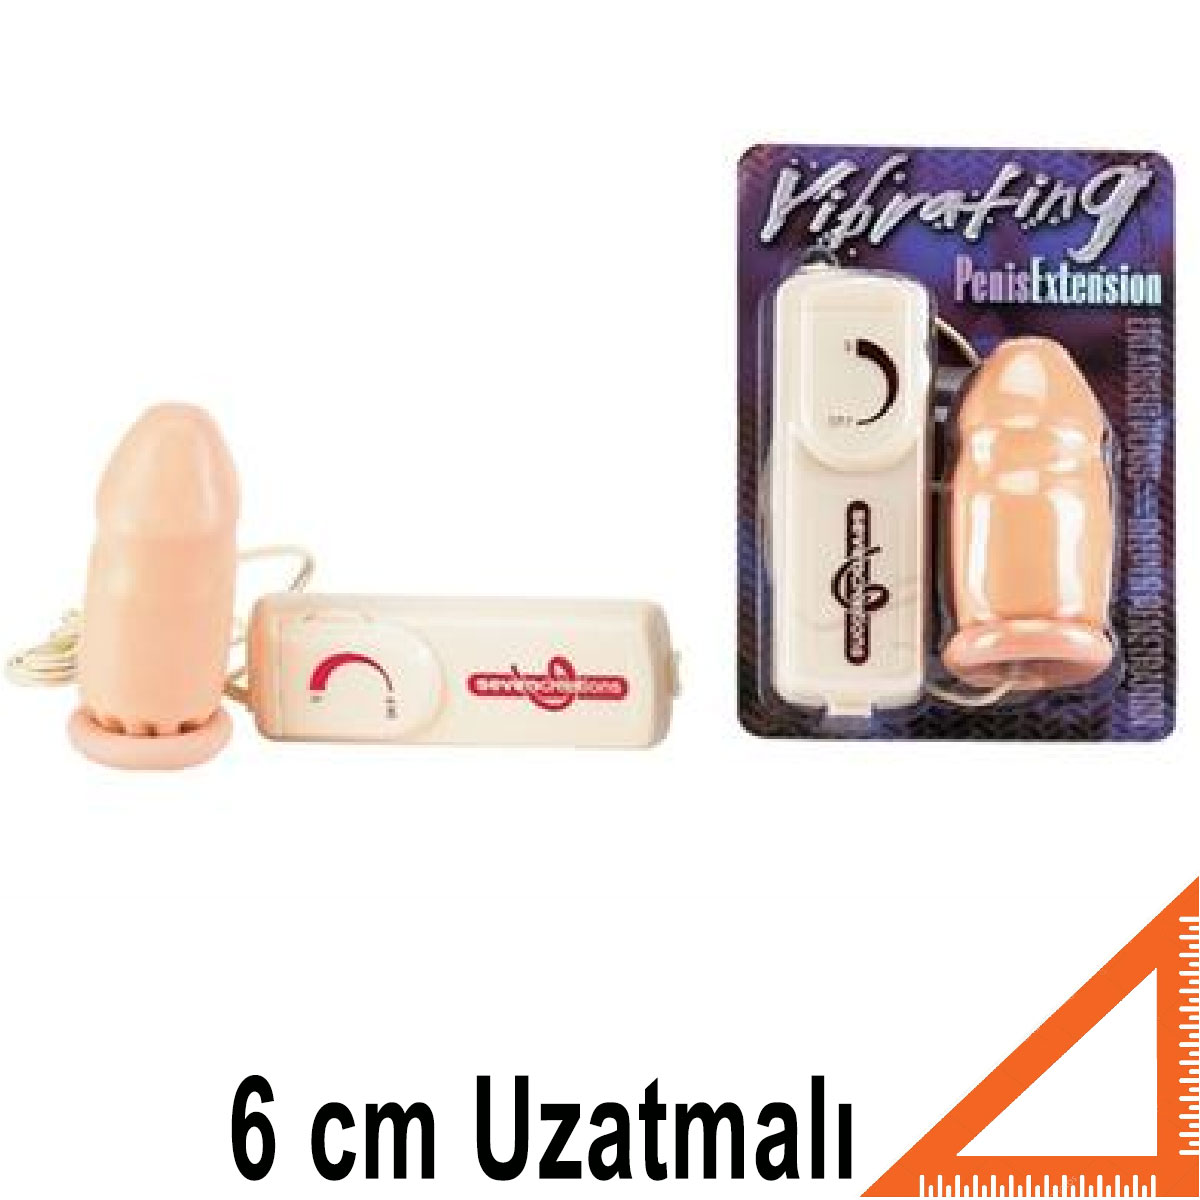 Vibrating Penis Extension Ten Rengi Titreimli 6 cm Uzatmal Prezervatif AL-41-1720-03